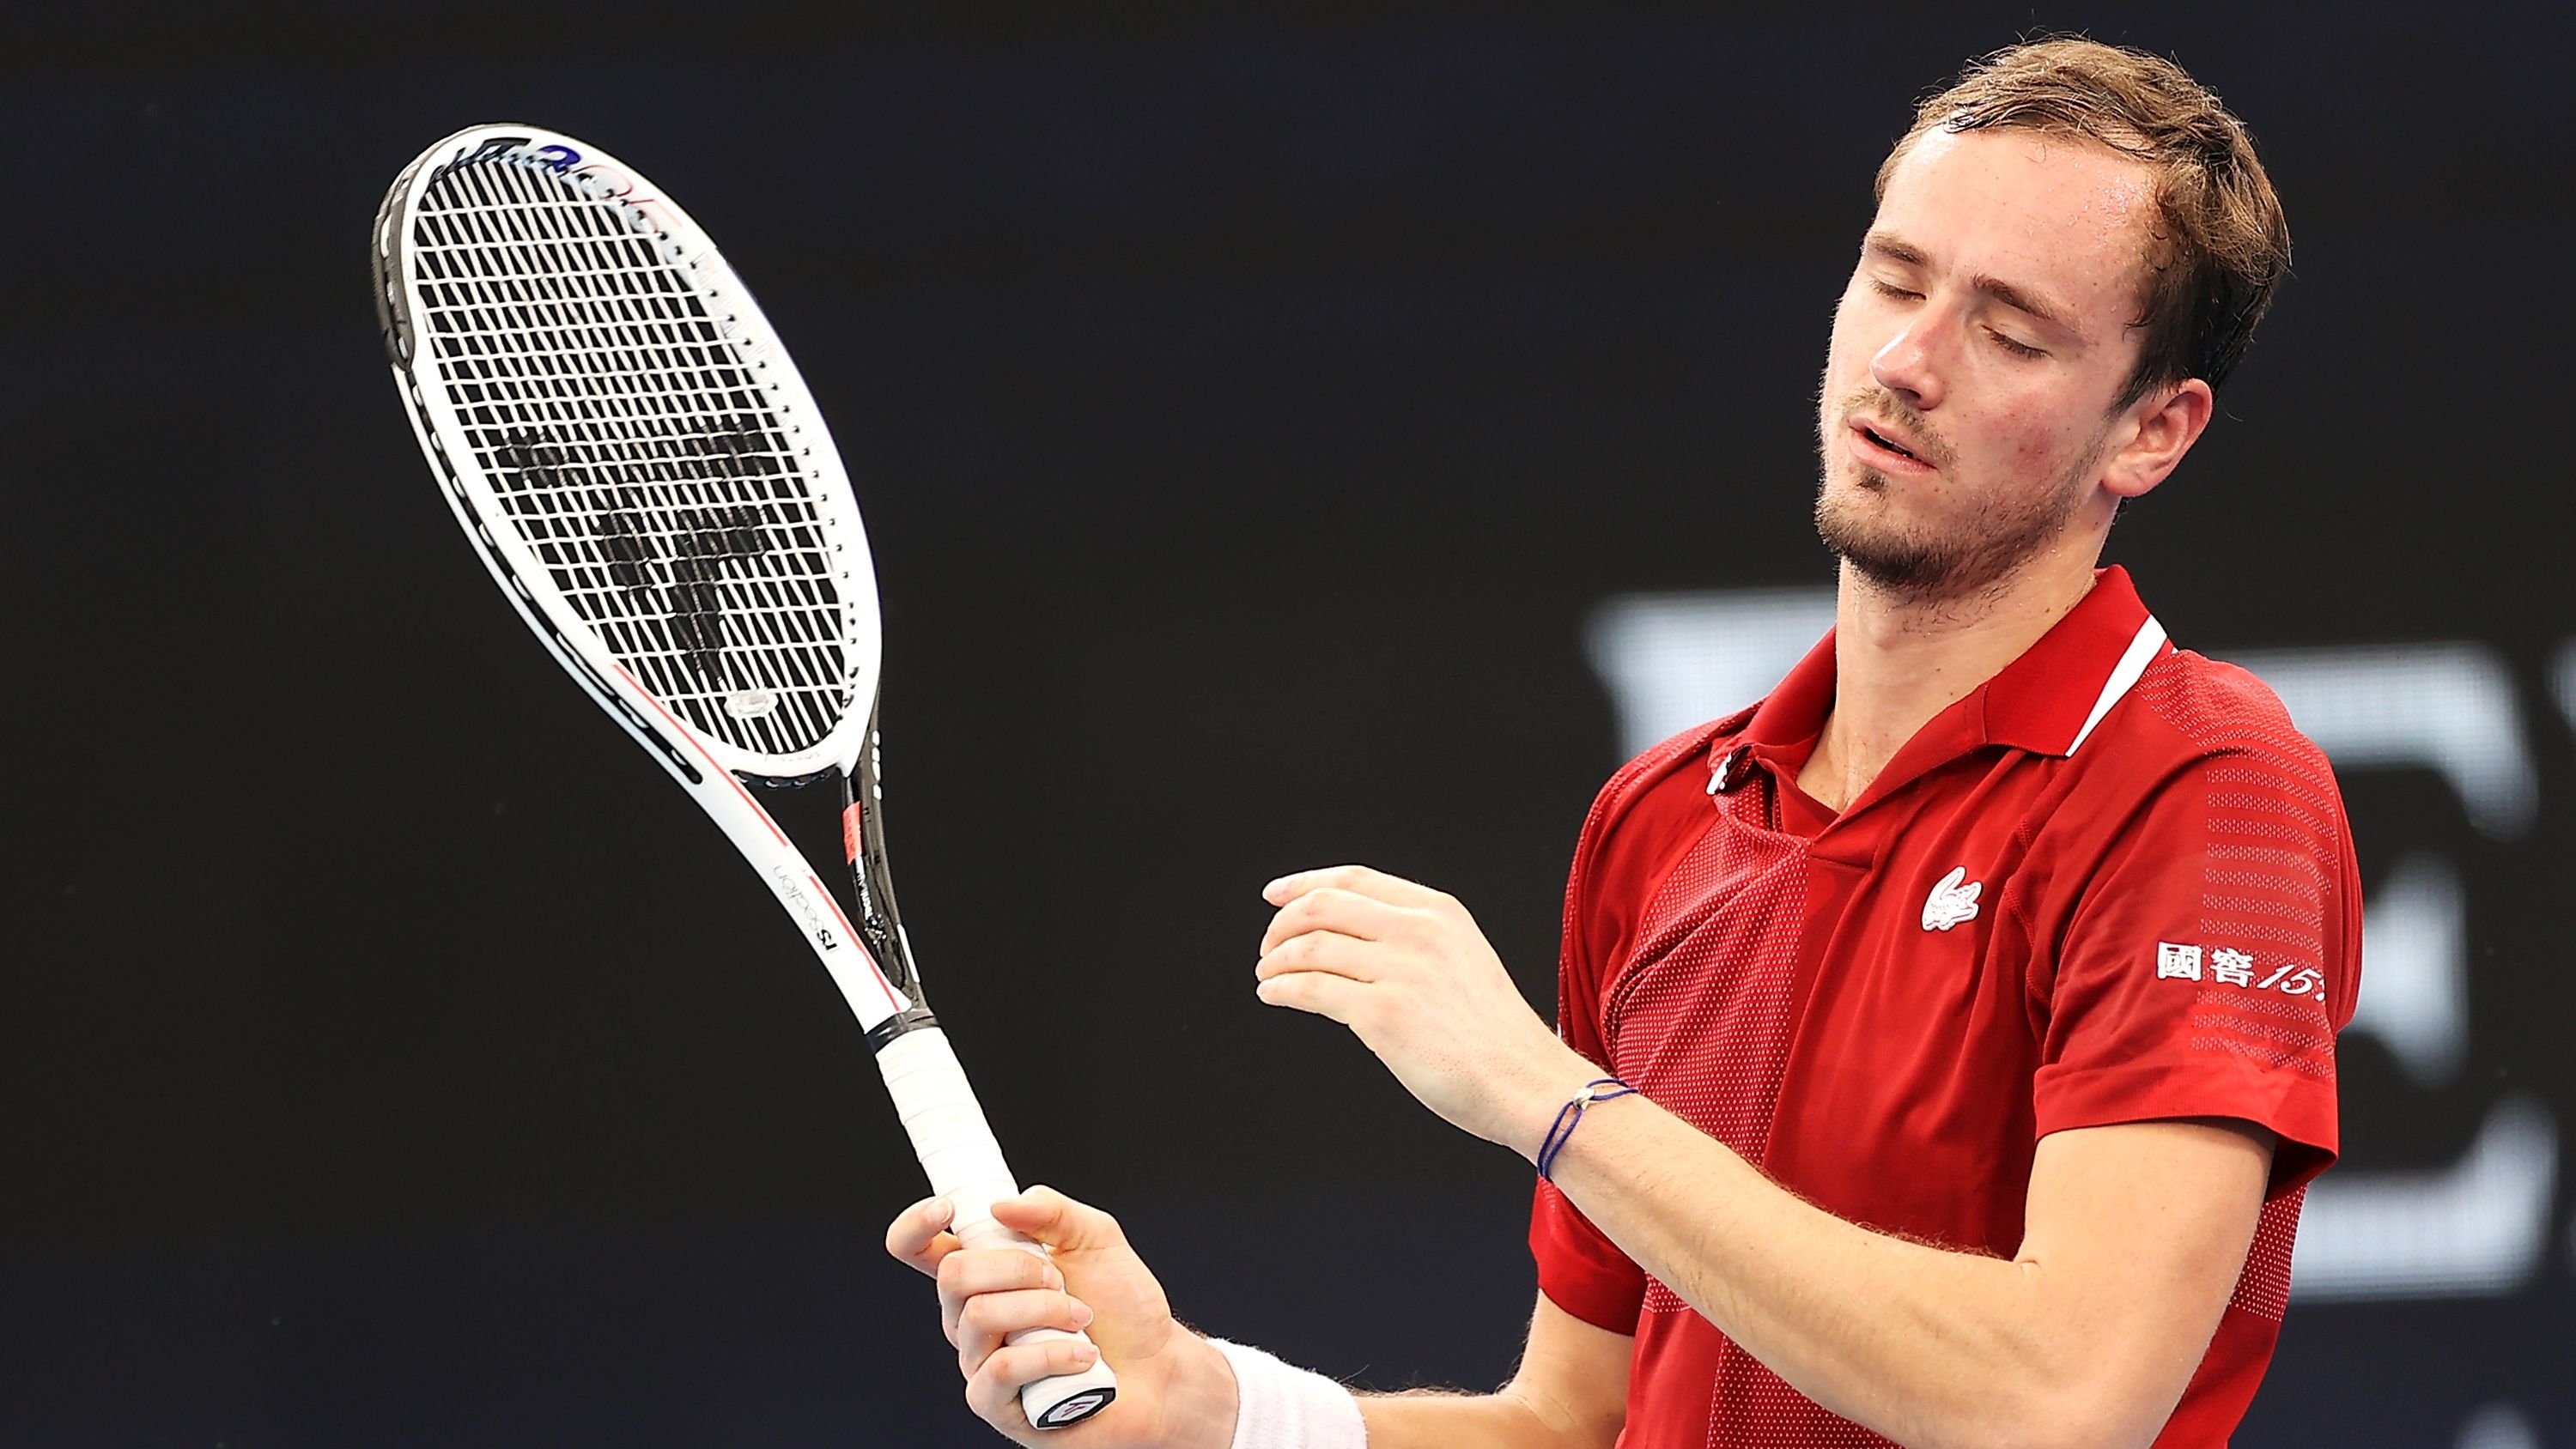 Australian Open favourite Daniil Medvedev upset by world No.35 Ugo Humbert in ATP Cup clash